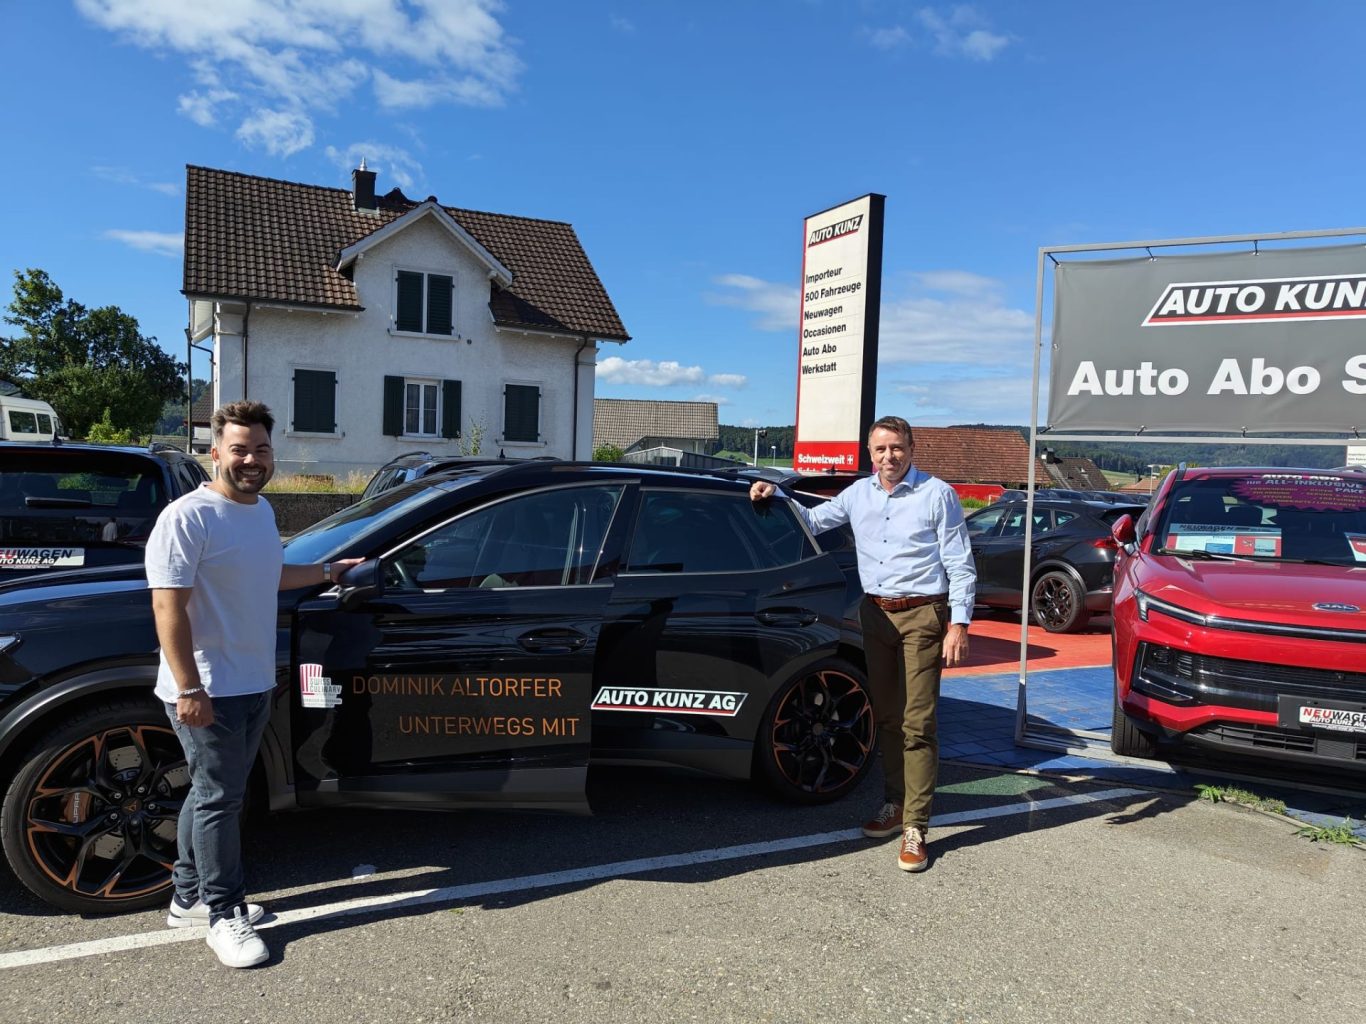 Le célèbre chef Dominik Altorfer coopère avec Garage Auto Kunz AG à Wohlen - Auto Kunz AG mit den schweizweit tiefsten Preisen